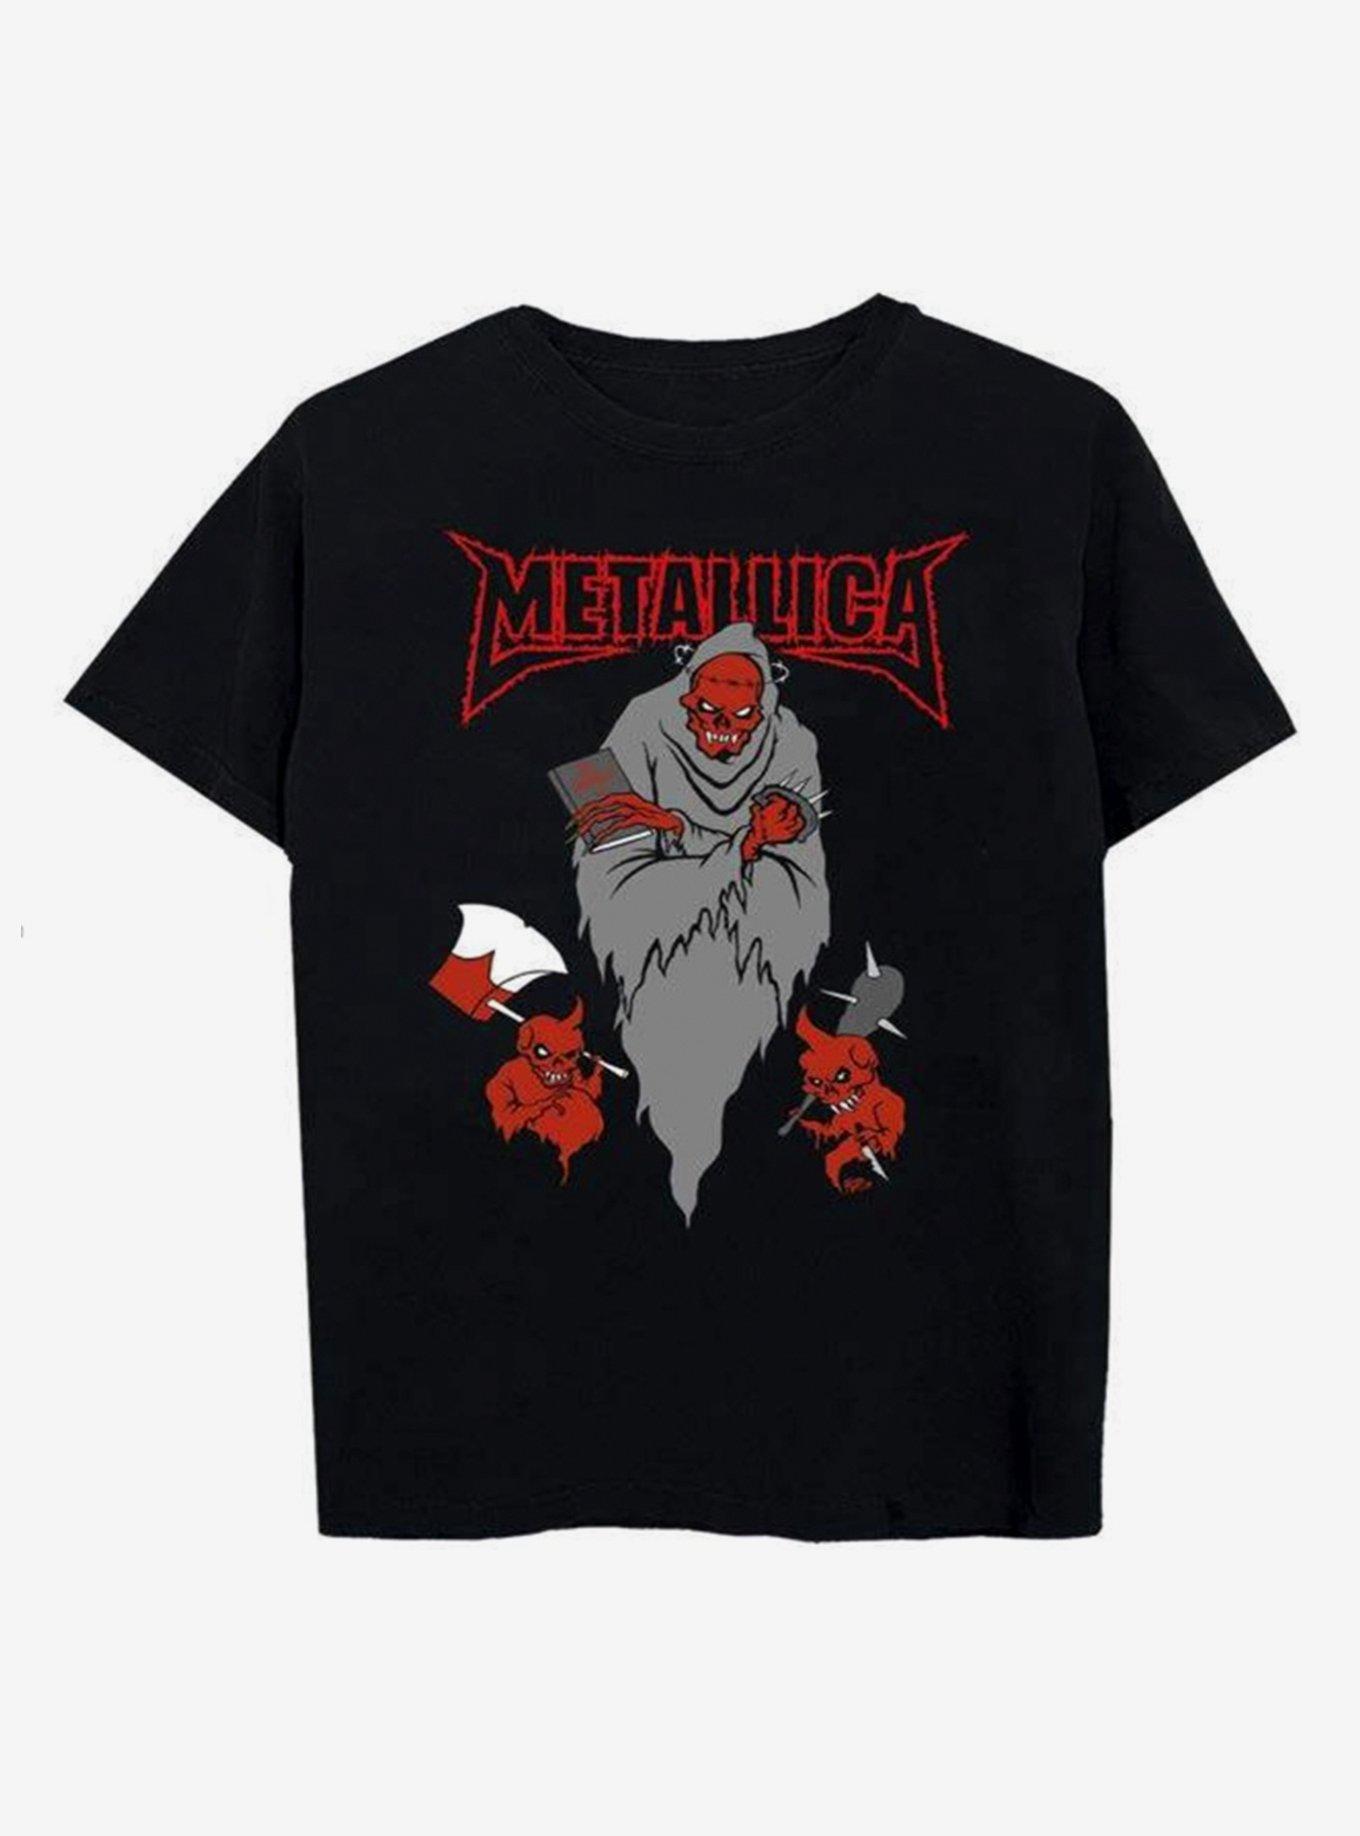 Metallica Trio Of Devils Boyfriend Fit Girls T-Shirt, BLACK, hi-res